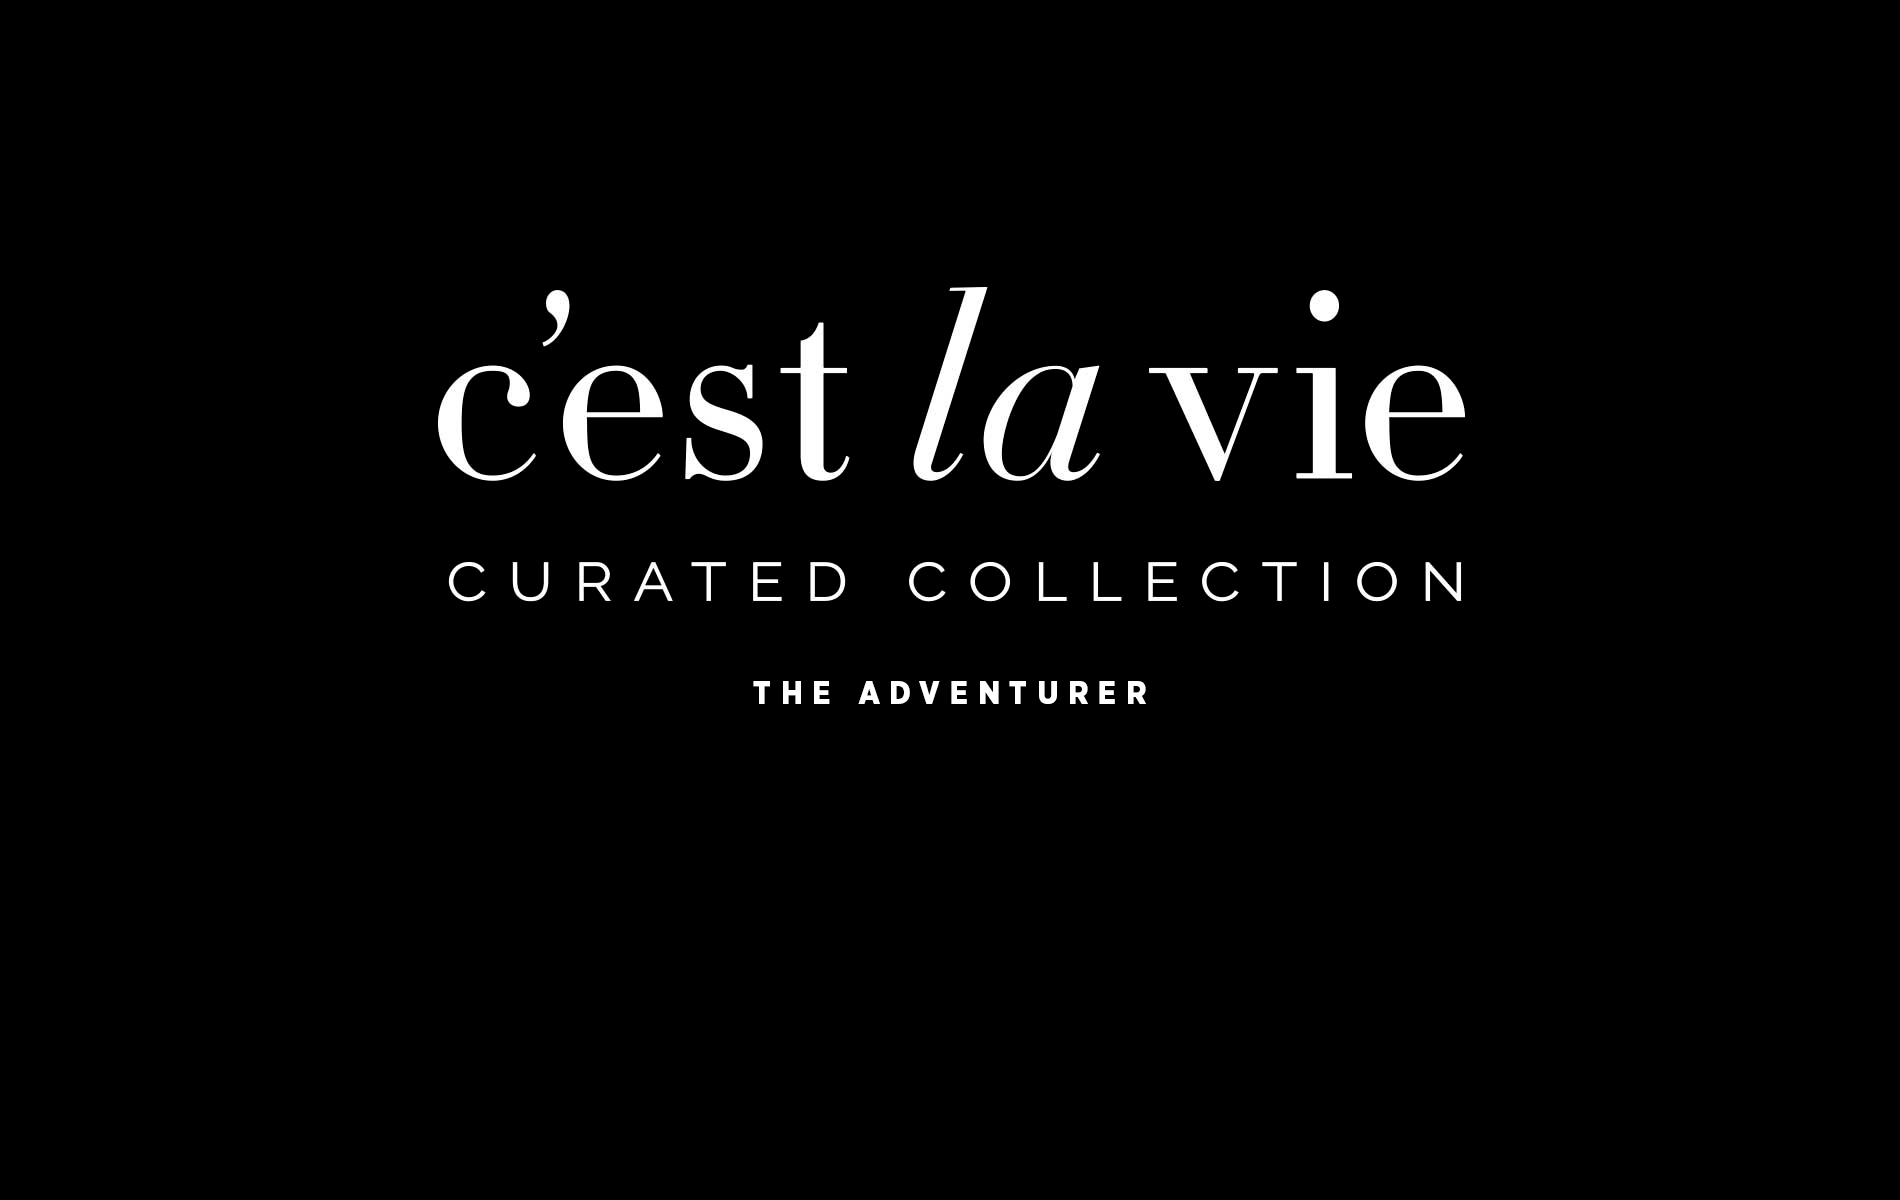 vie magazine cest la vie the adventurer issue 2017 curated collection